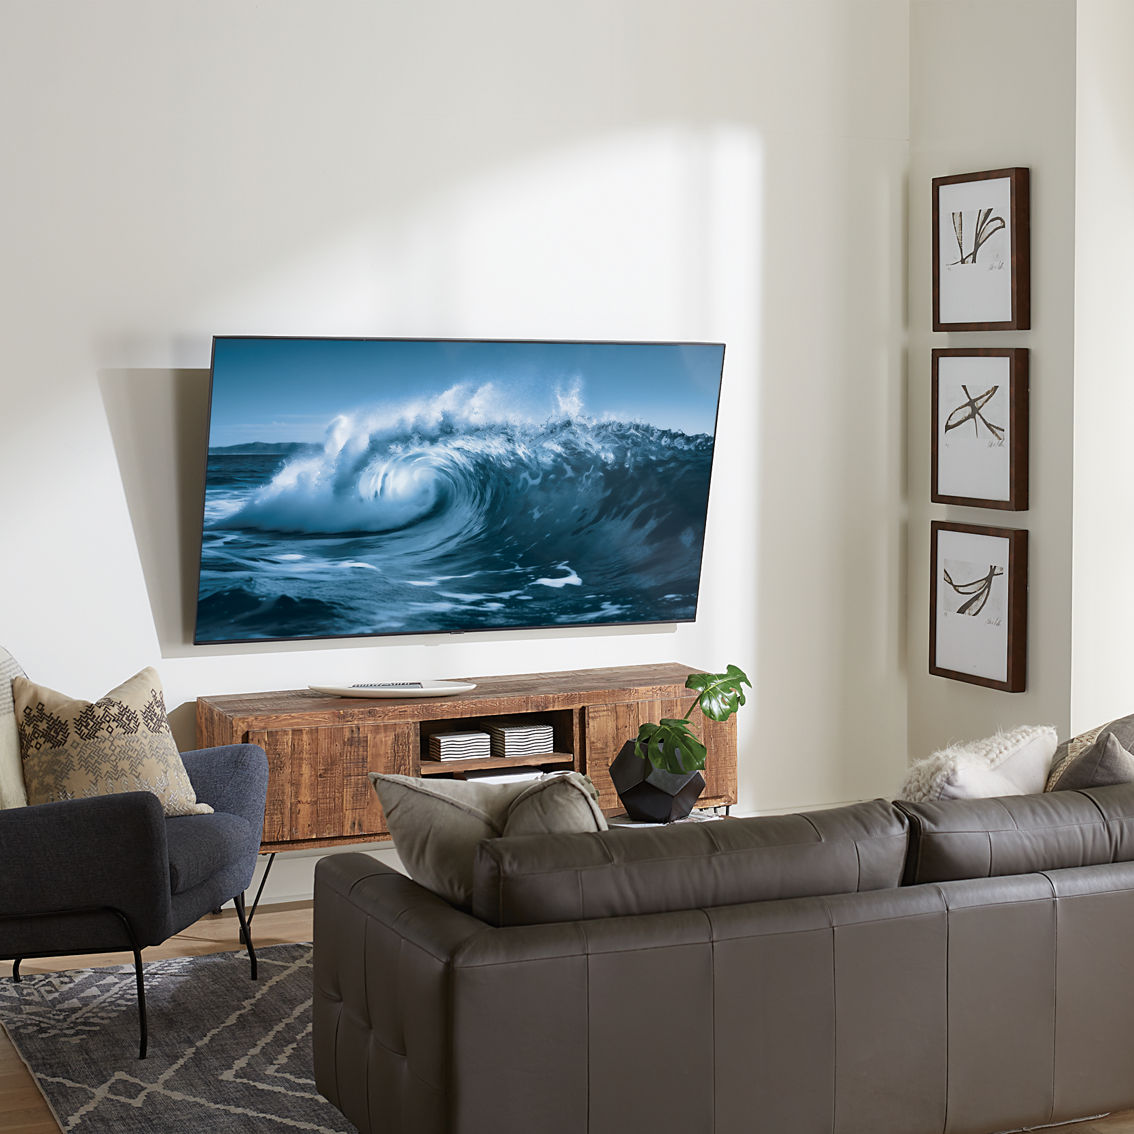 SANUS Vuepoint Extend + Tilt Mount for TVs 42 in. to 90 in. - Image 6 of 6